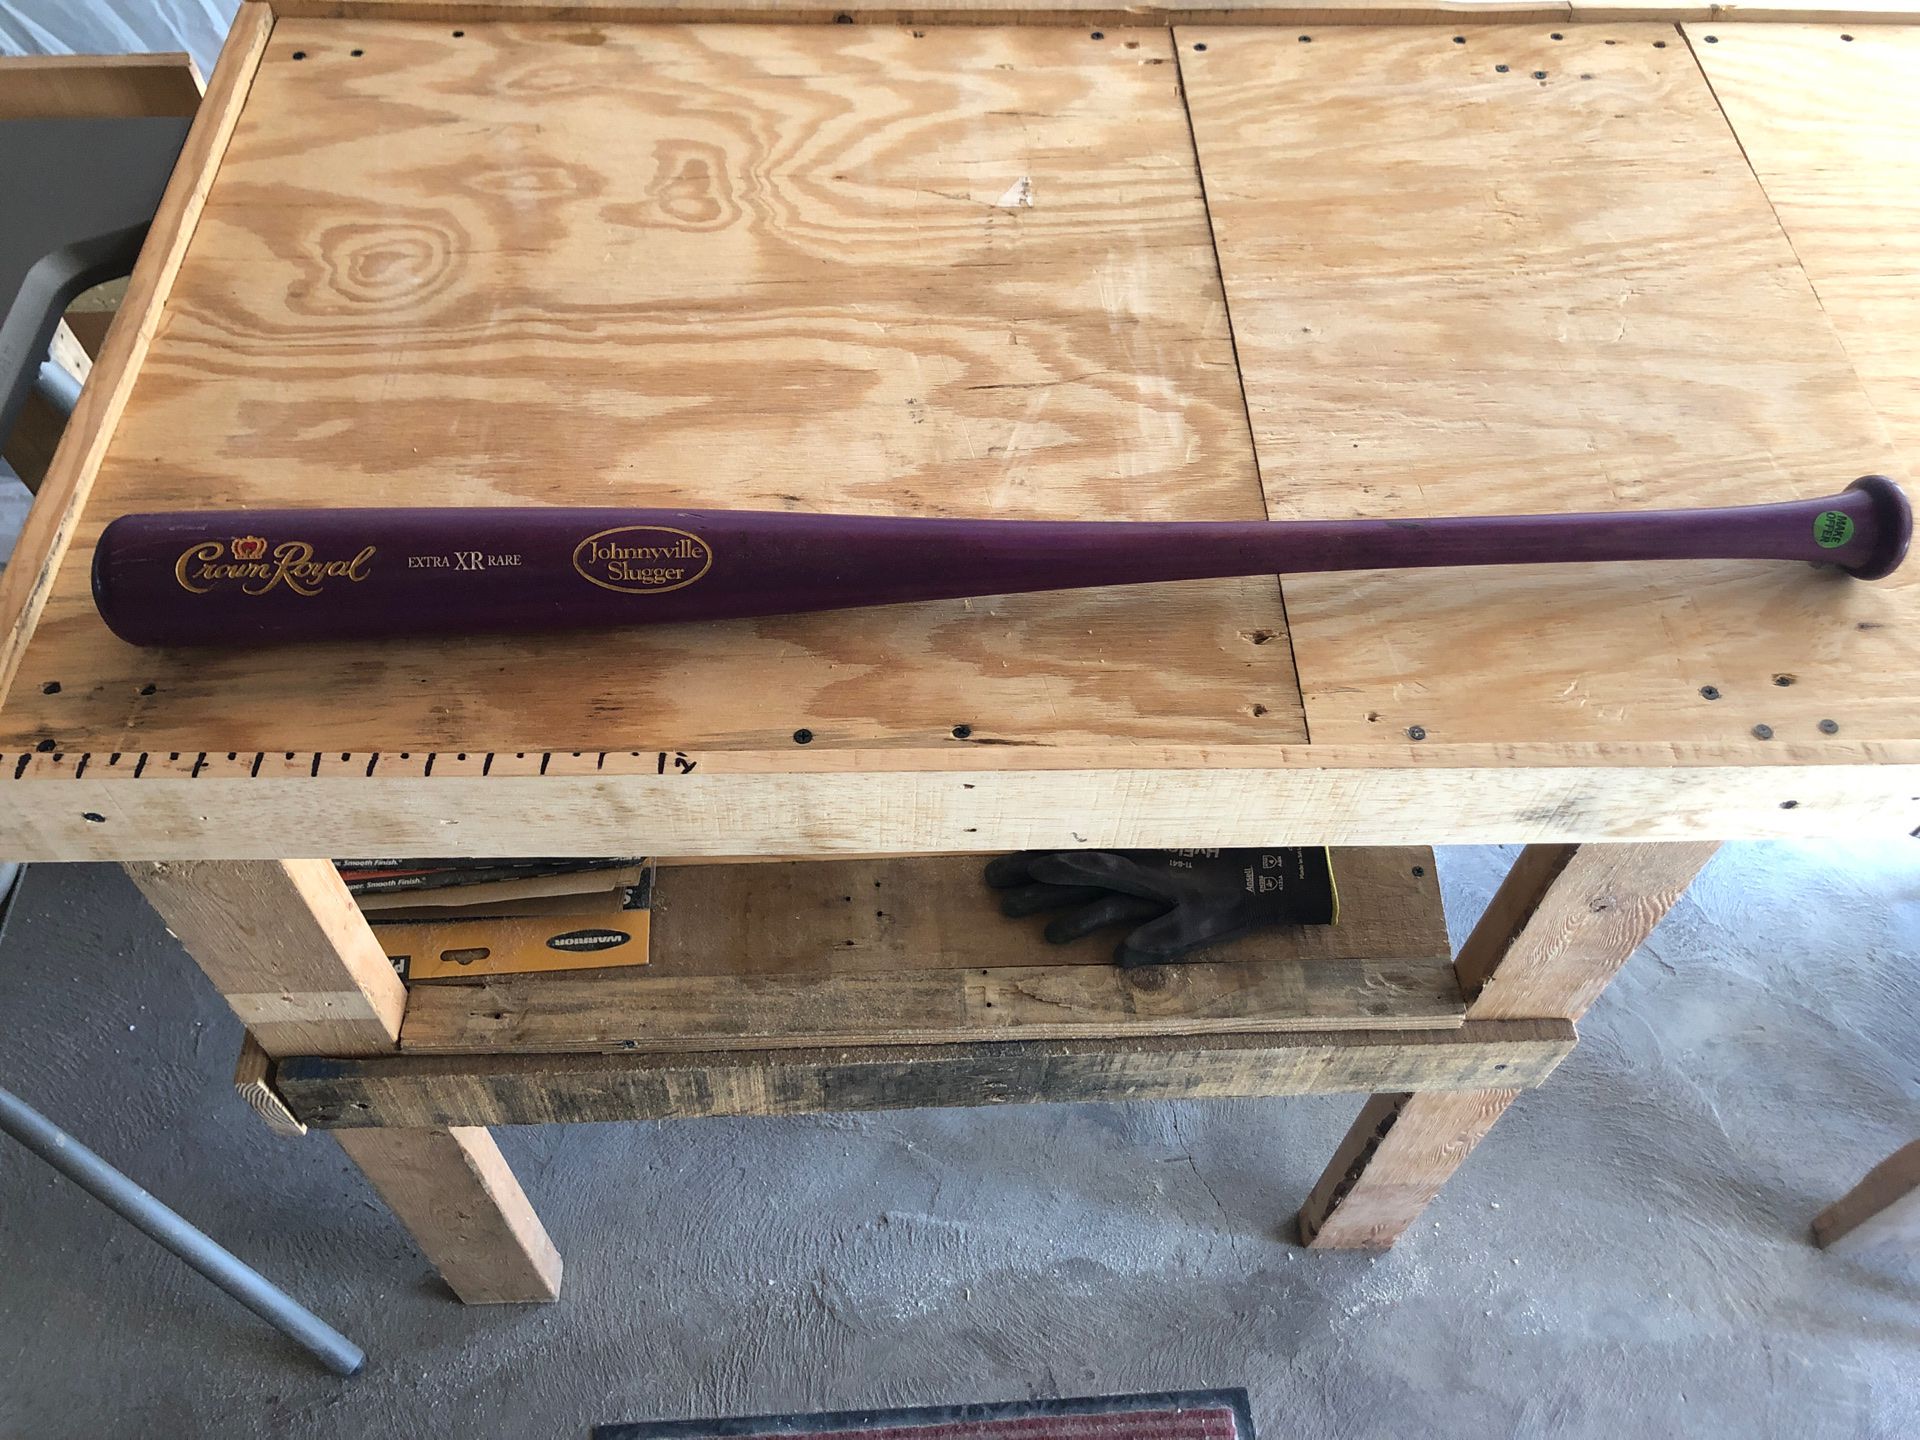 Decor crown royal baseball bat